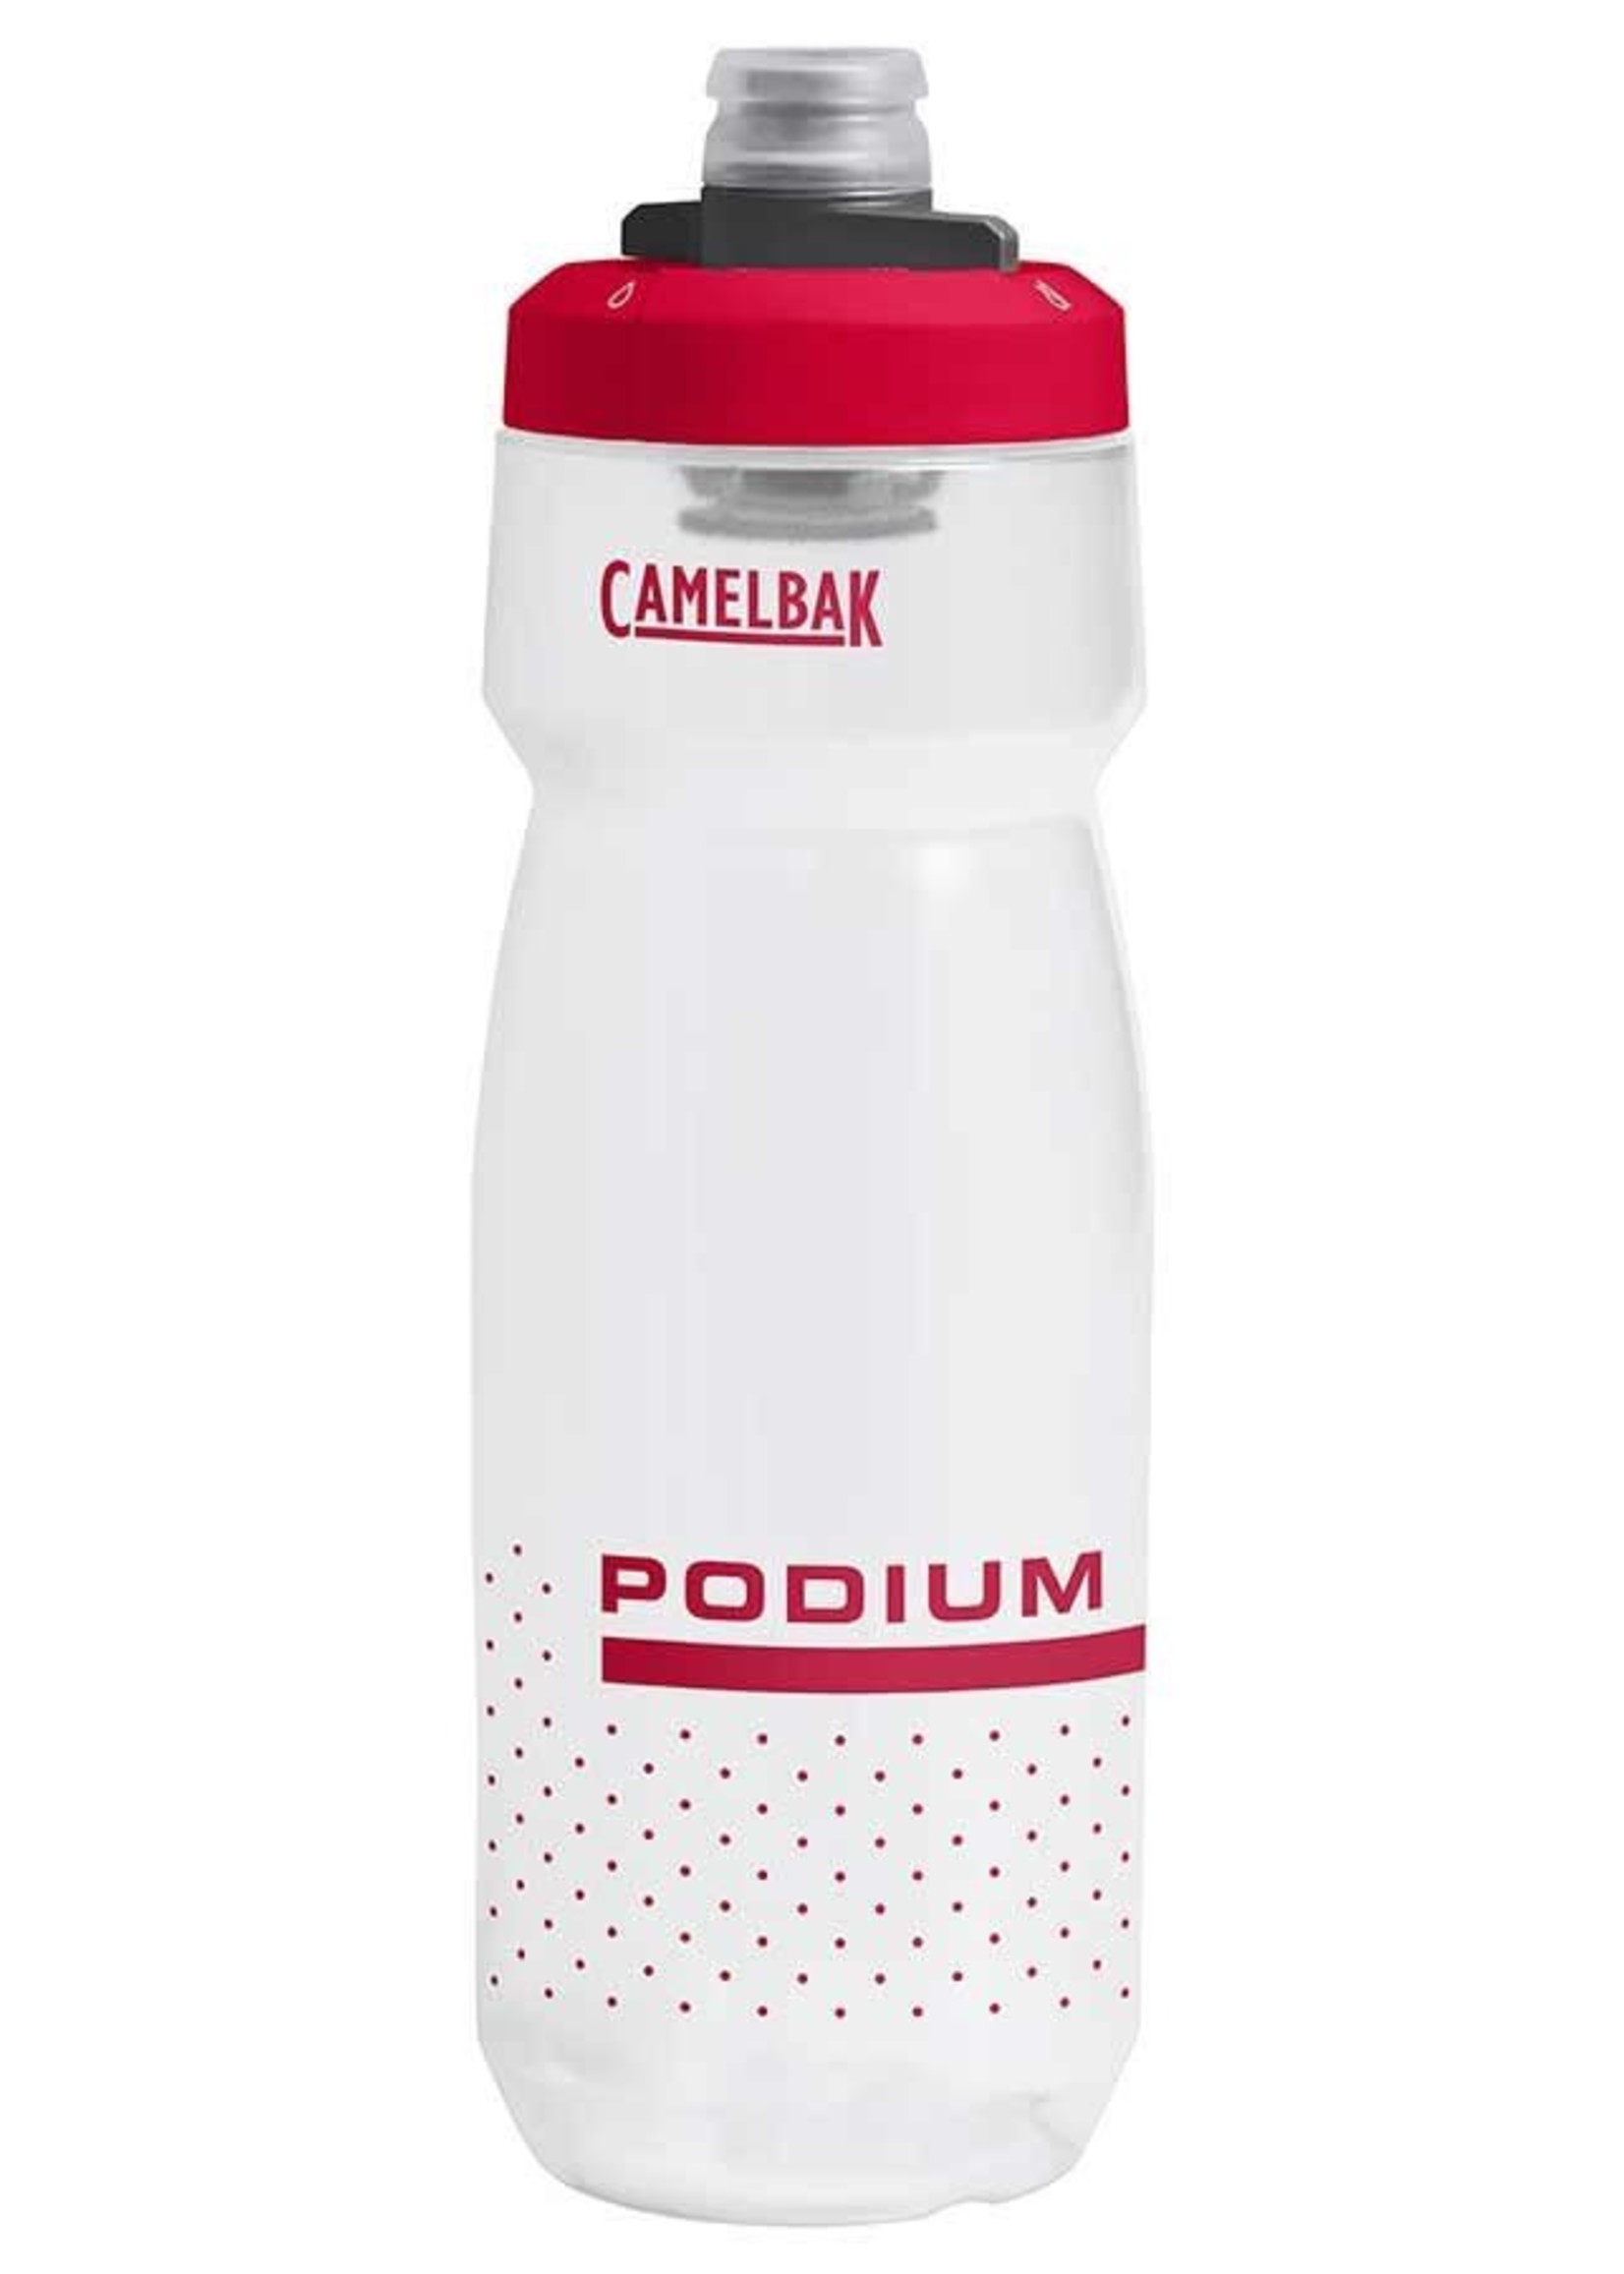 CamelBak Camelbak, Podium, Water bottle